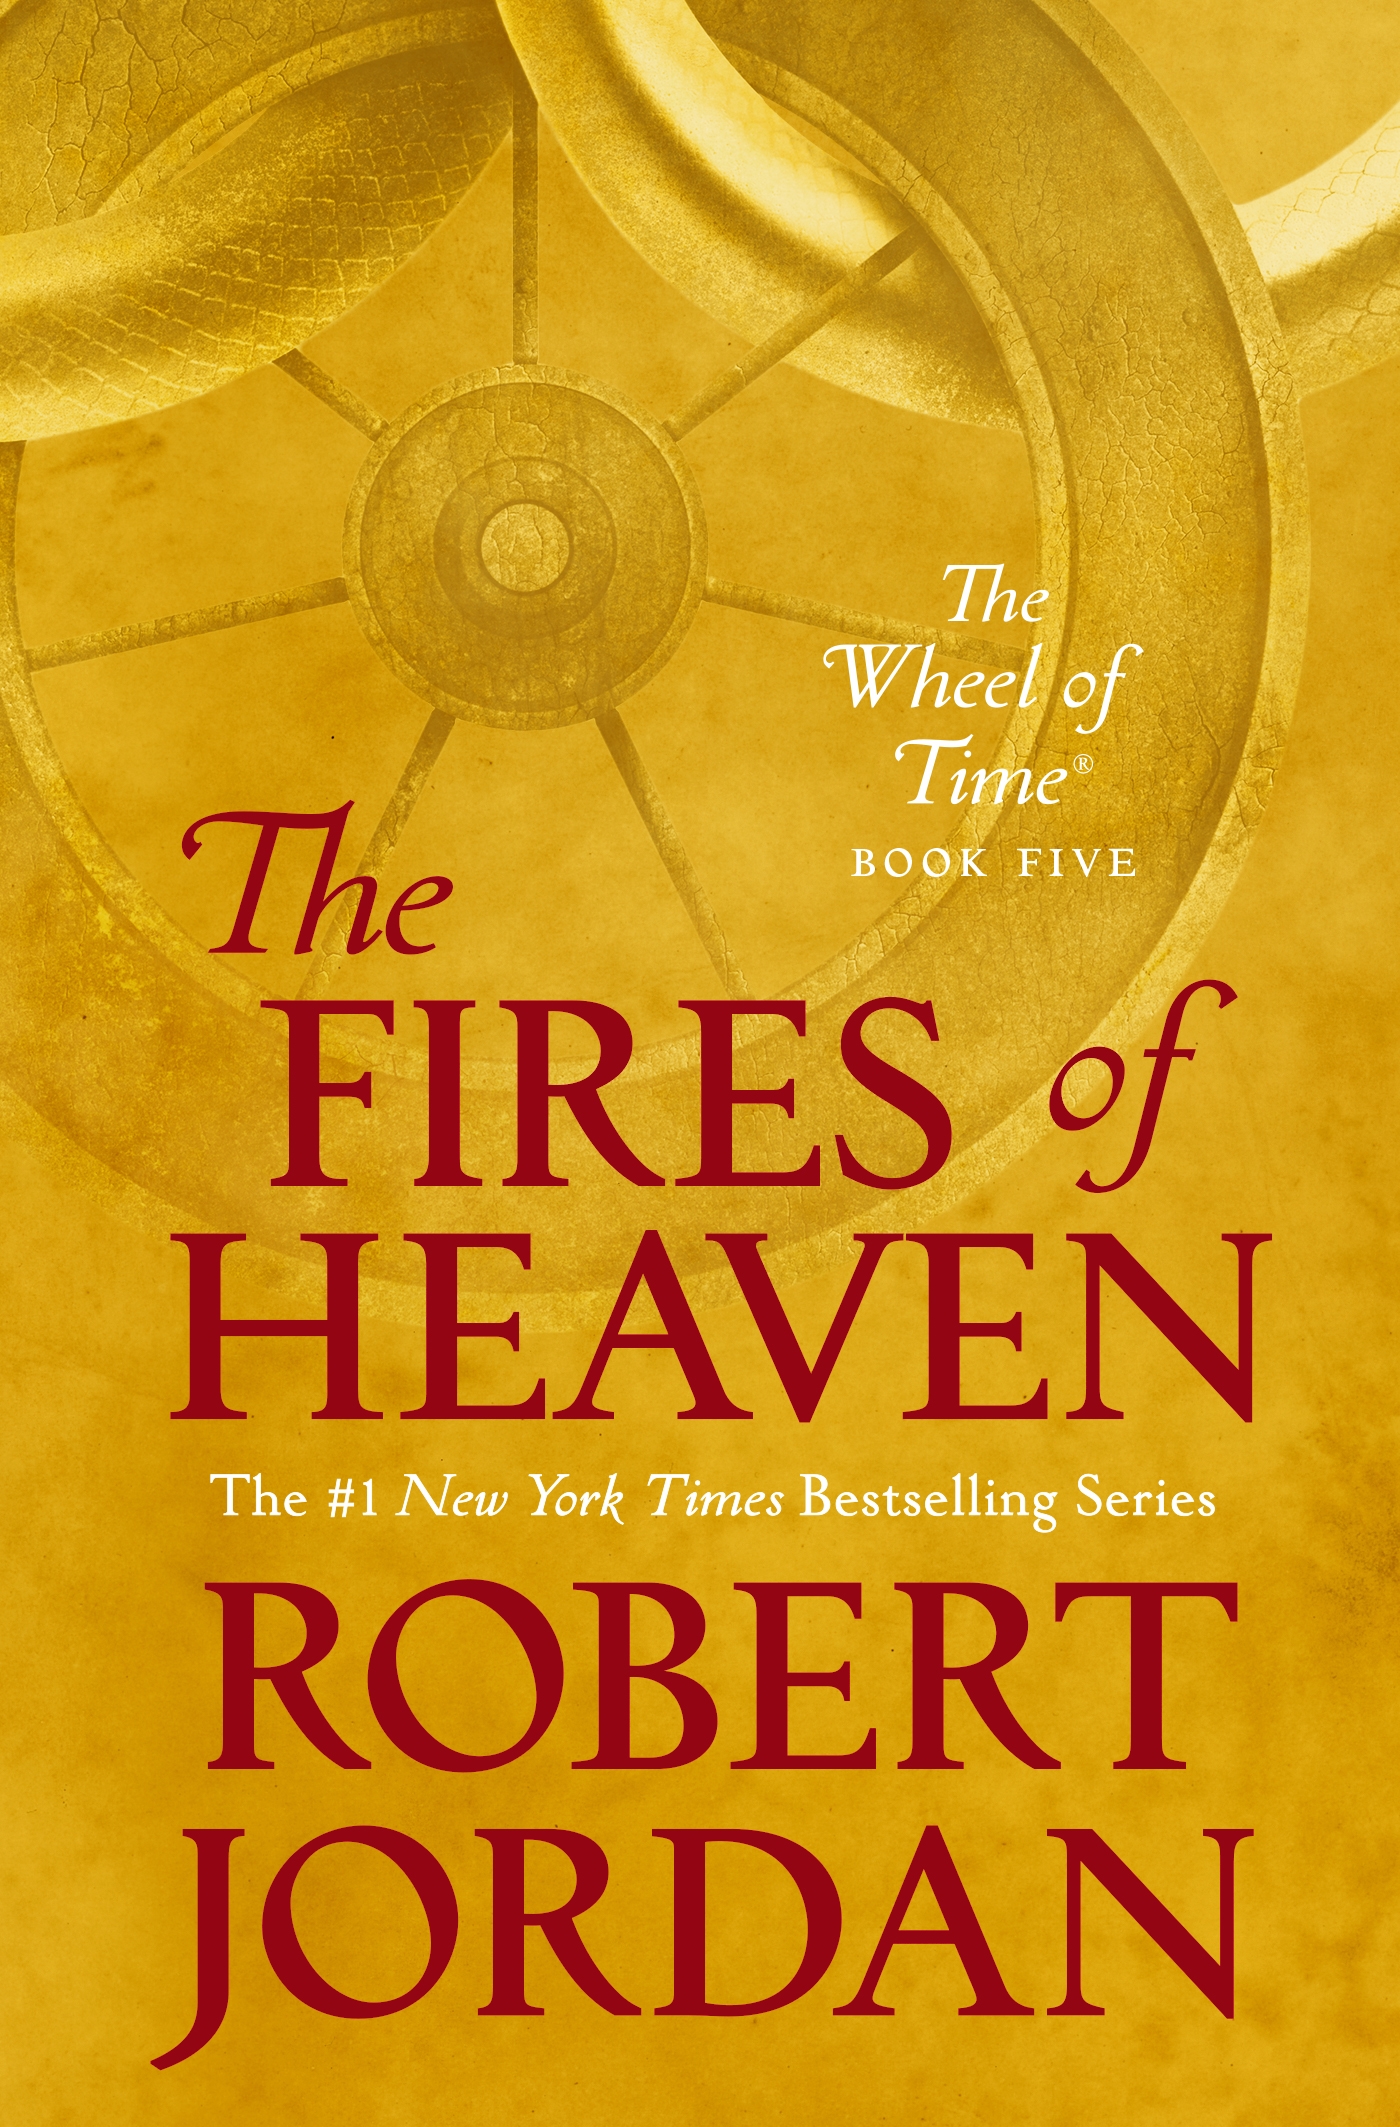 Book “The Fires of Heaven” by Robert Jordan — December 31, 2019